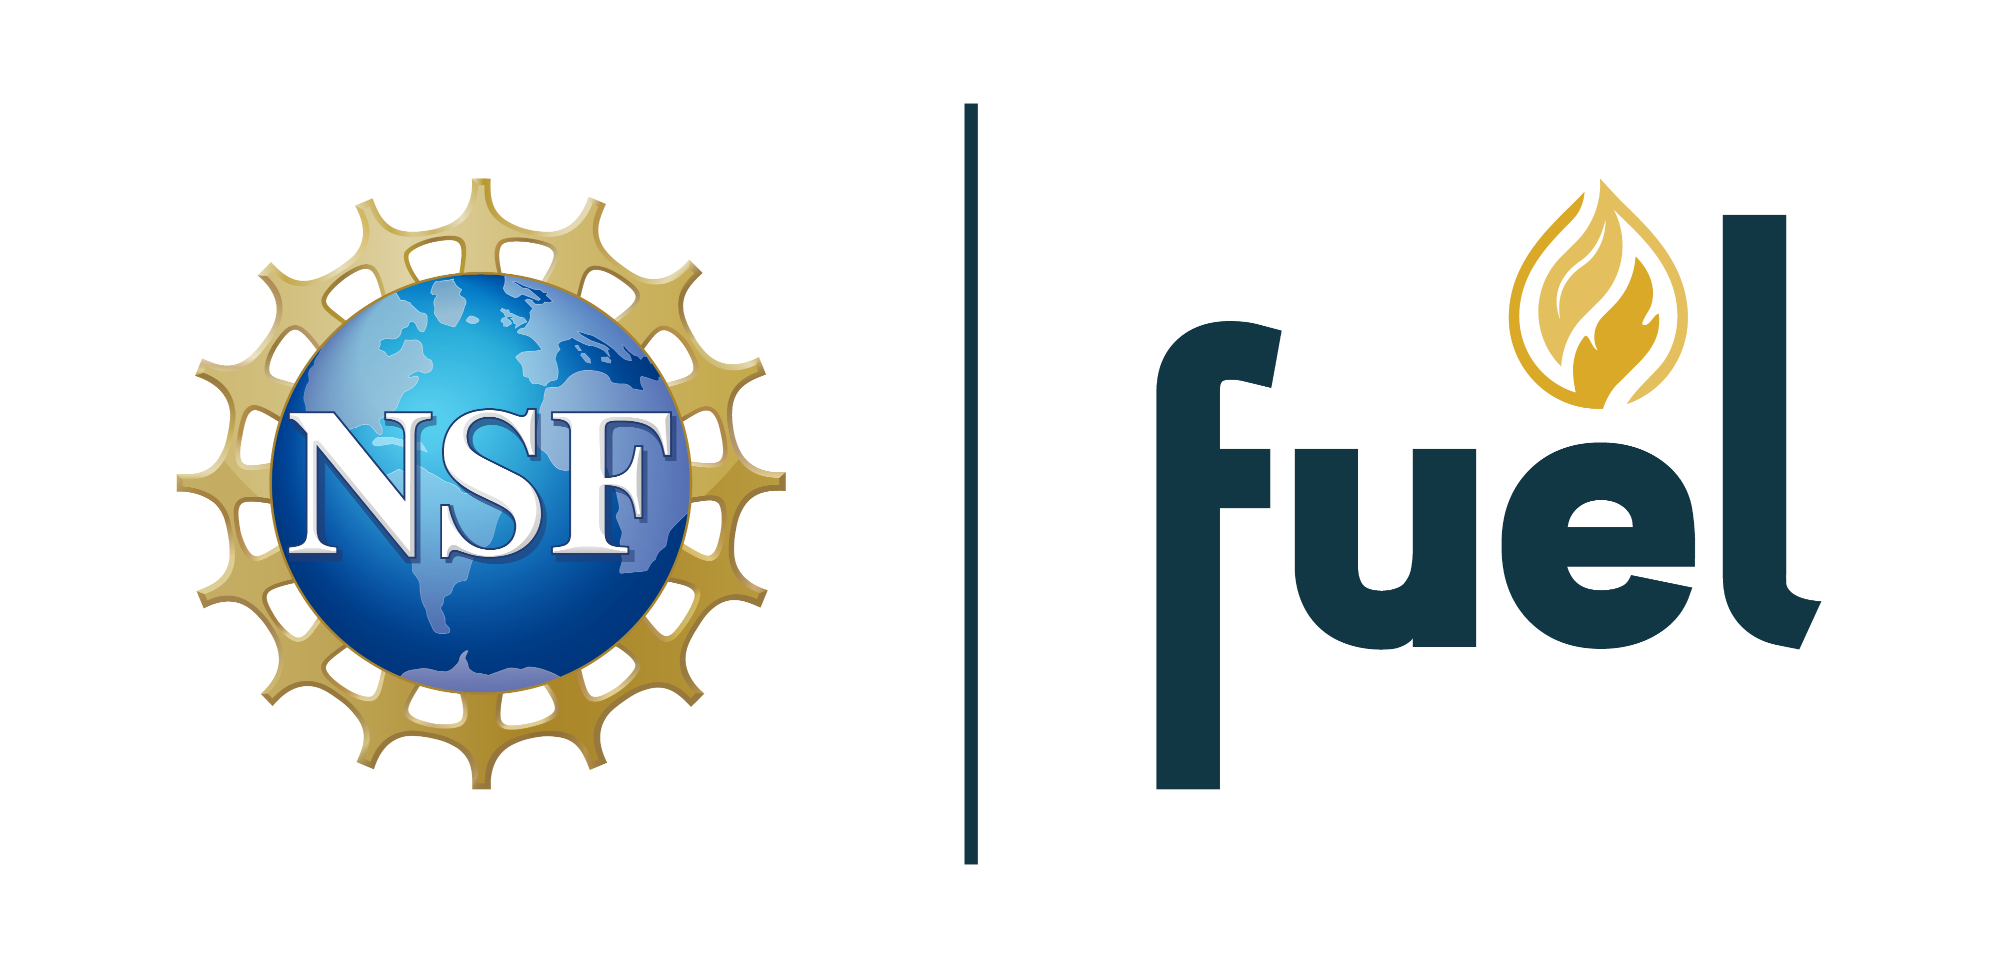 NSF Fuel Partnership Logo Lock up